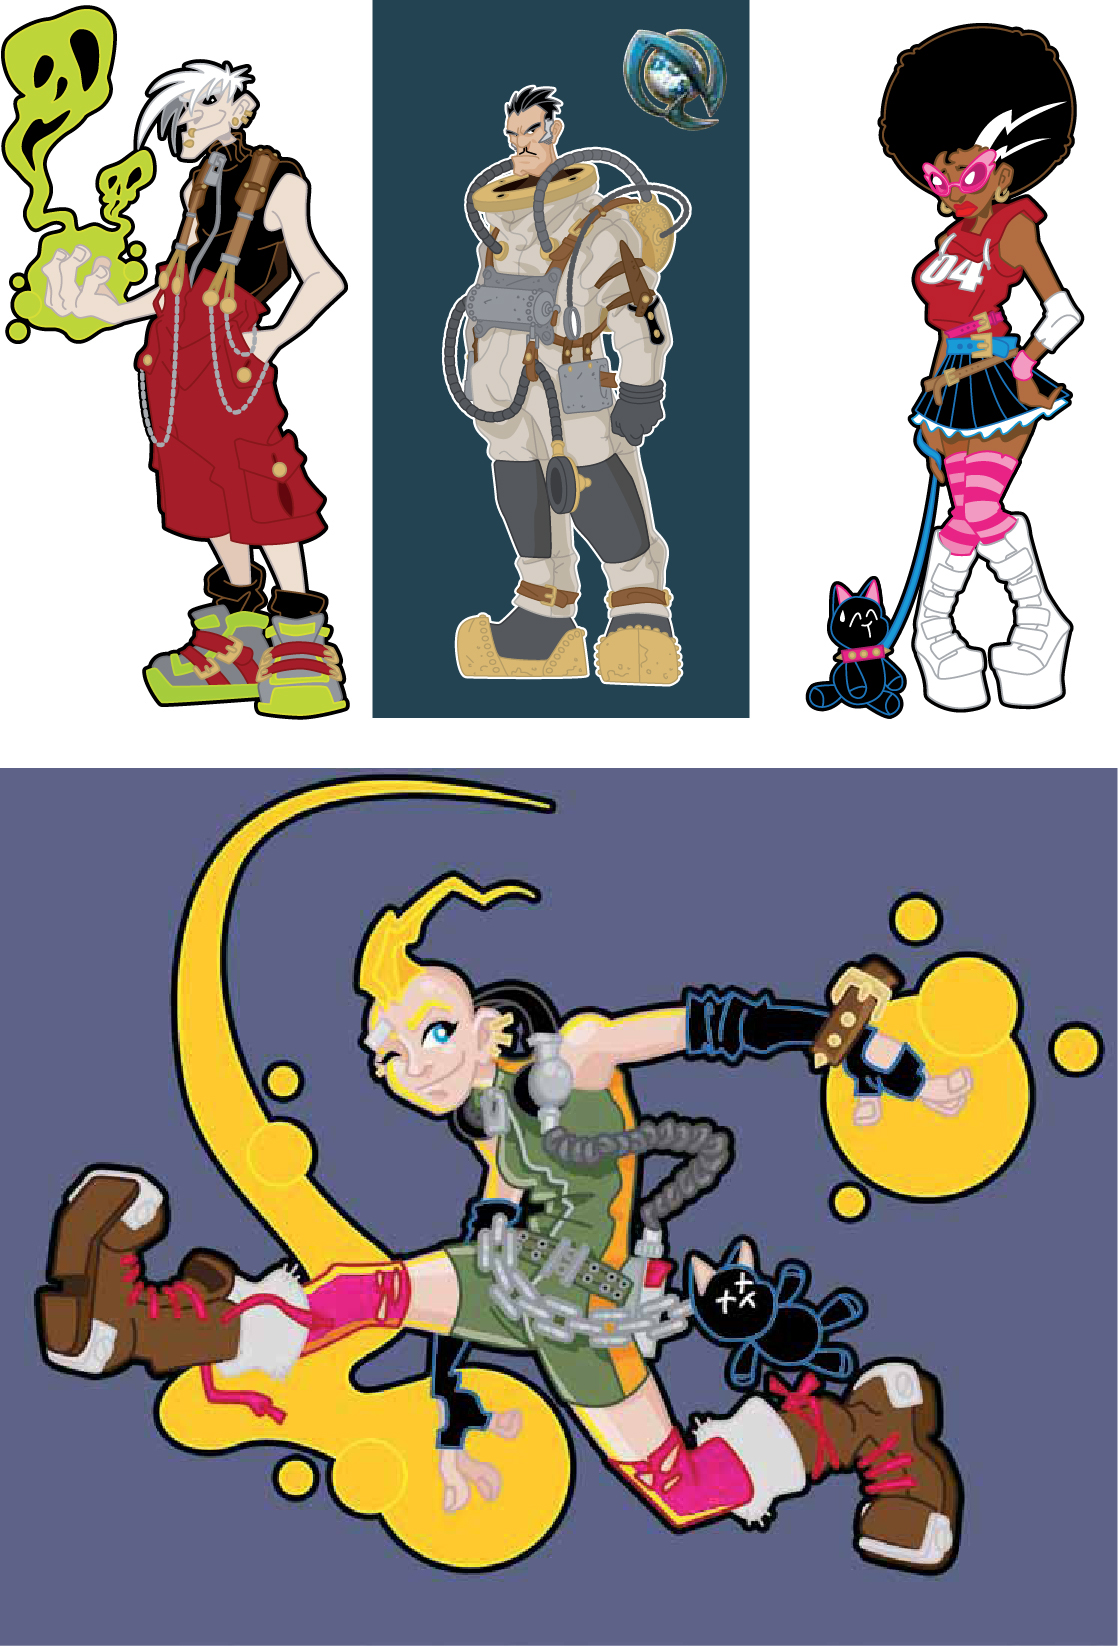 Illustrator traditionnal ilustration Character design